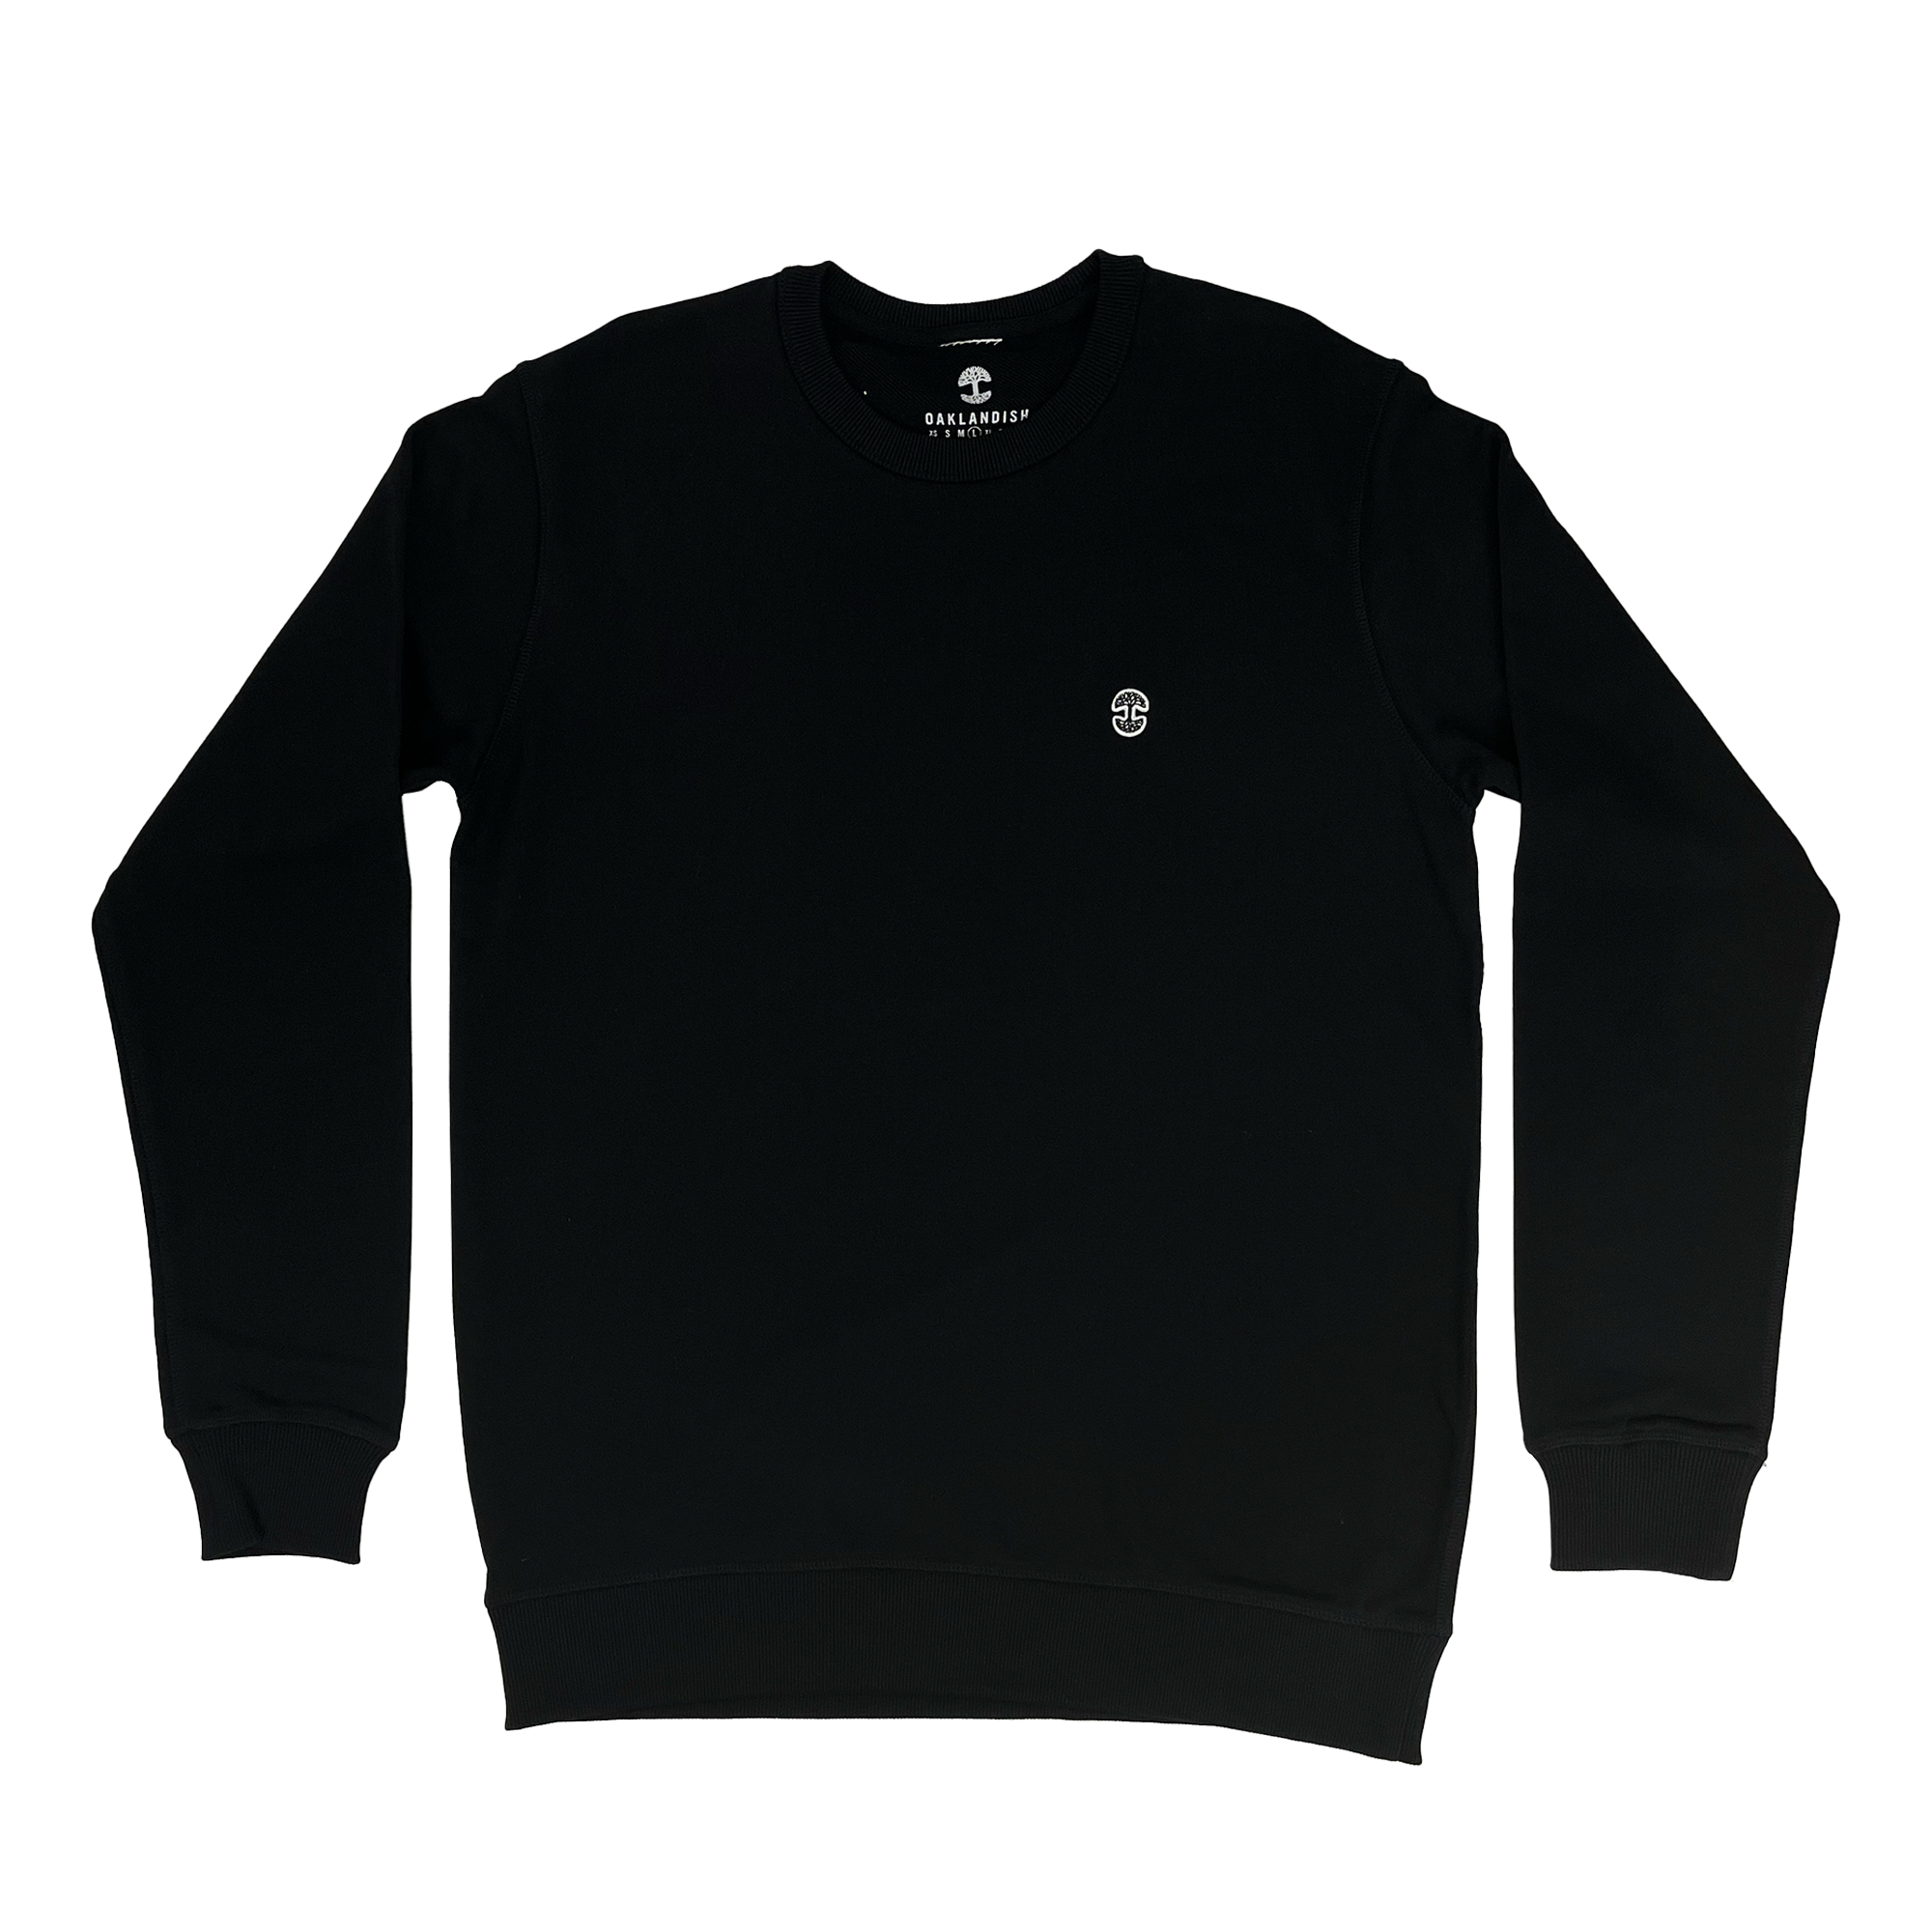 Front view of Premium crewneck sweatshirt - Oaklandish tree logo, Black.